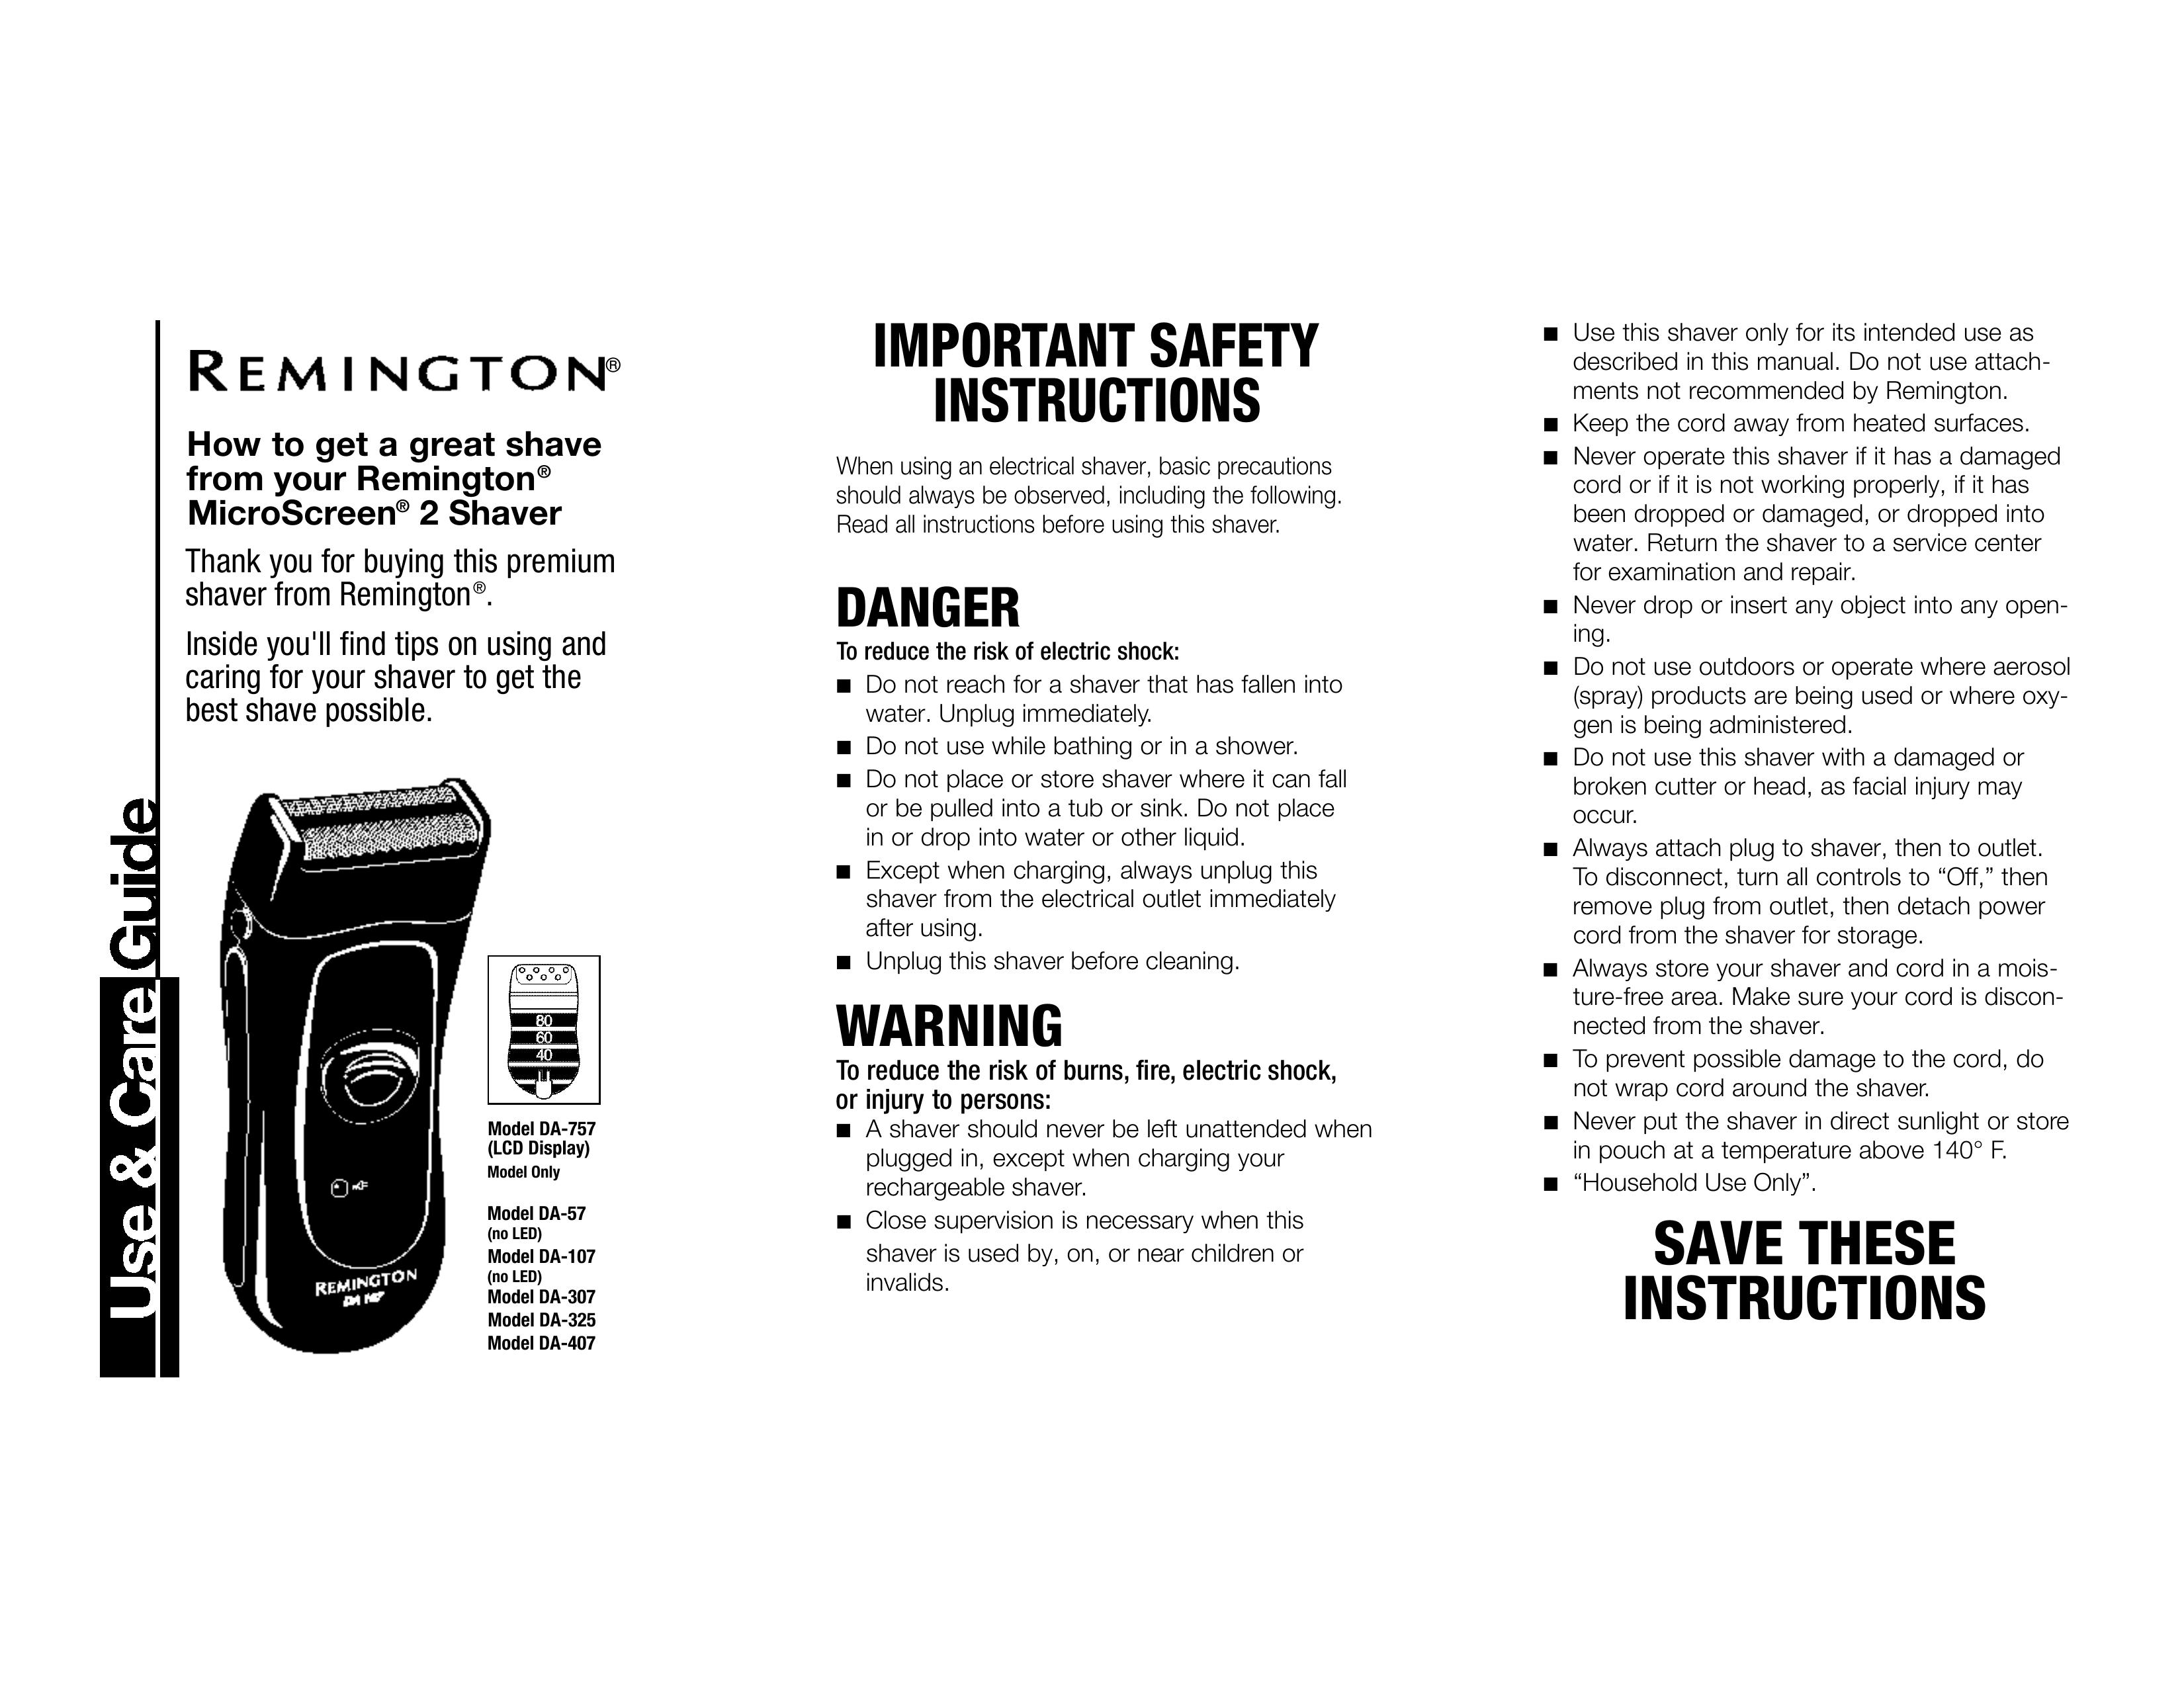 Remington DA-107 Electric Shaver User Manual